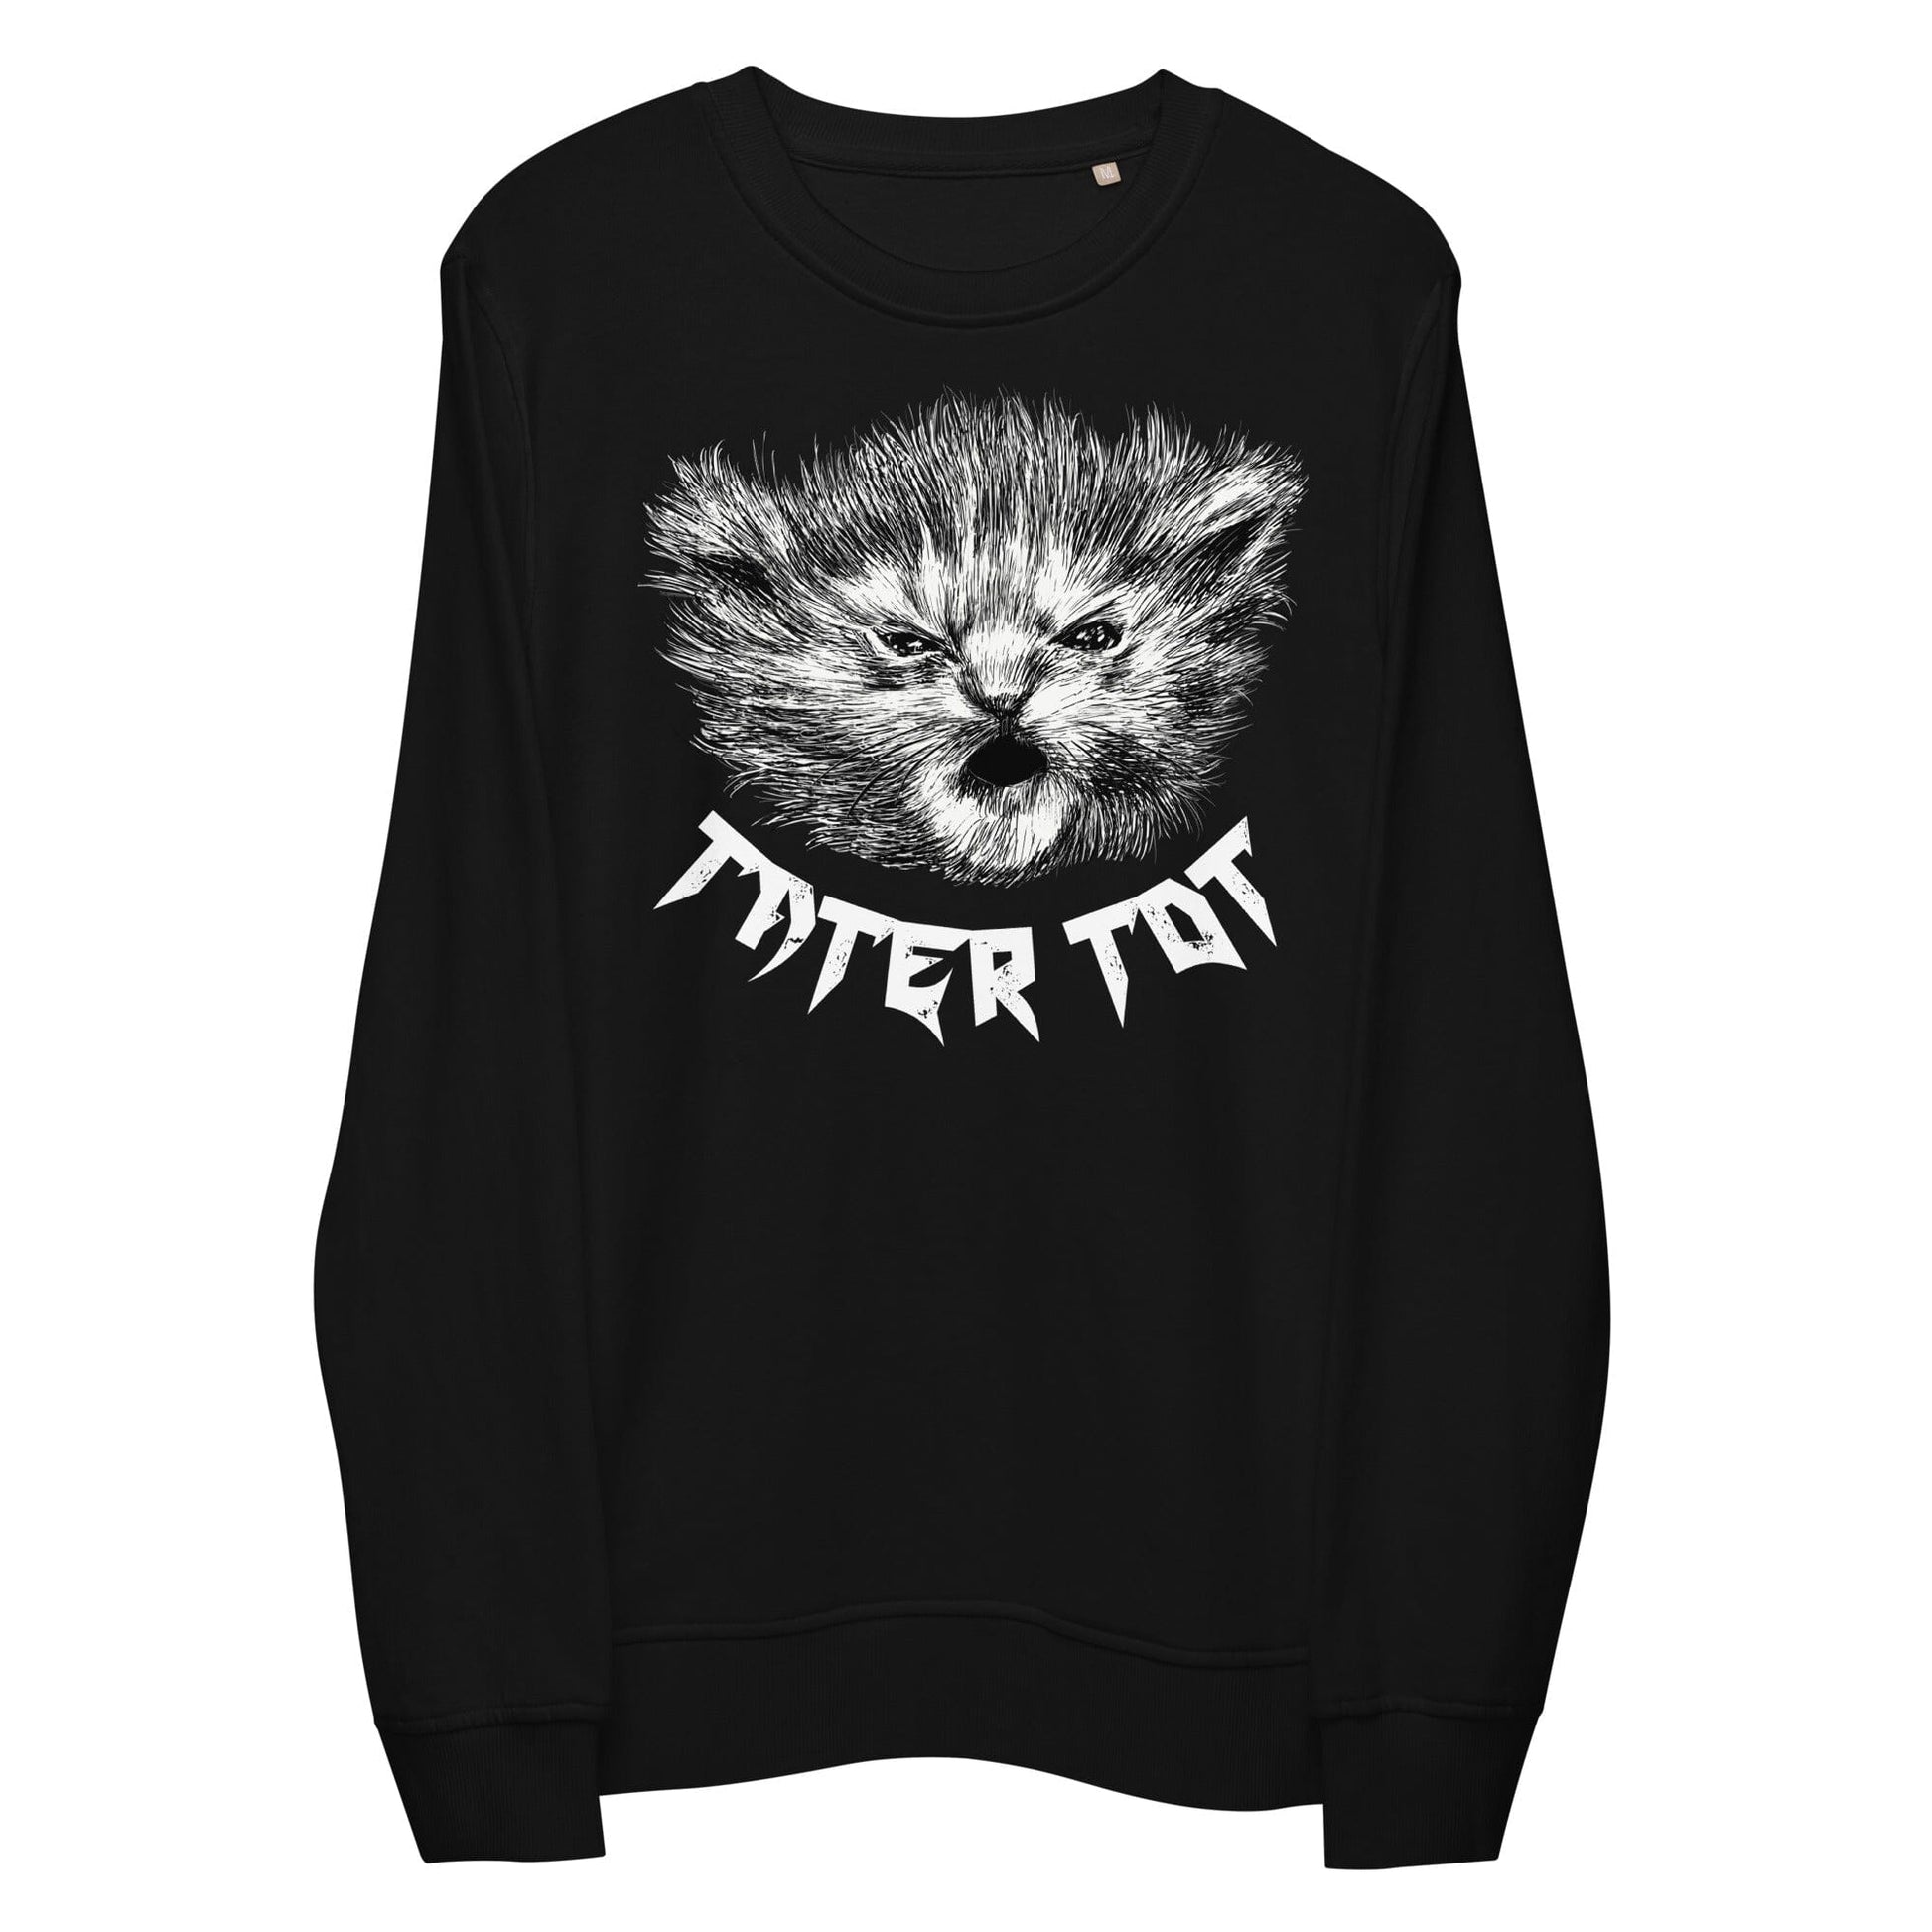 BLACK Metal Tater Tot Sweatshirt [Unfoiled] (All net proceeds go to Kitty CrusAIDe) JoyousJoyfulJoyness S 